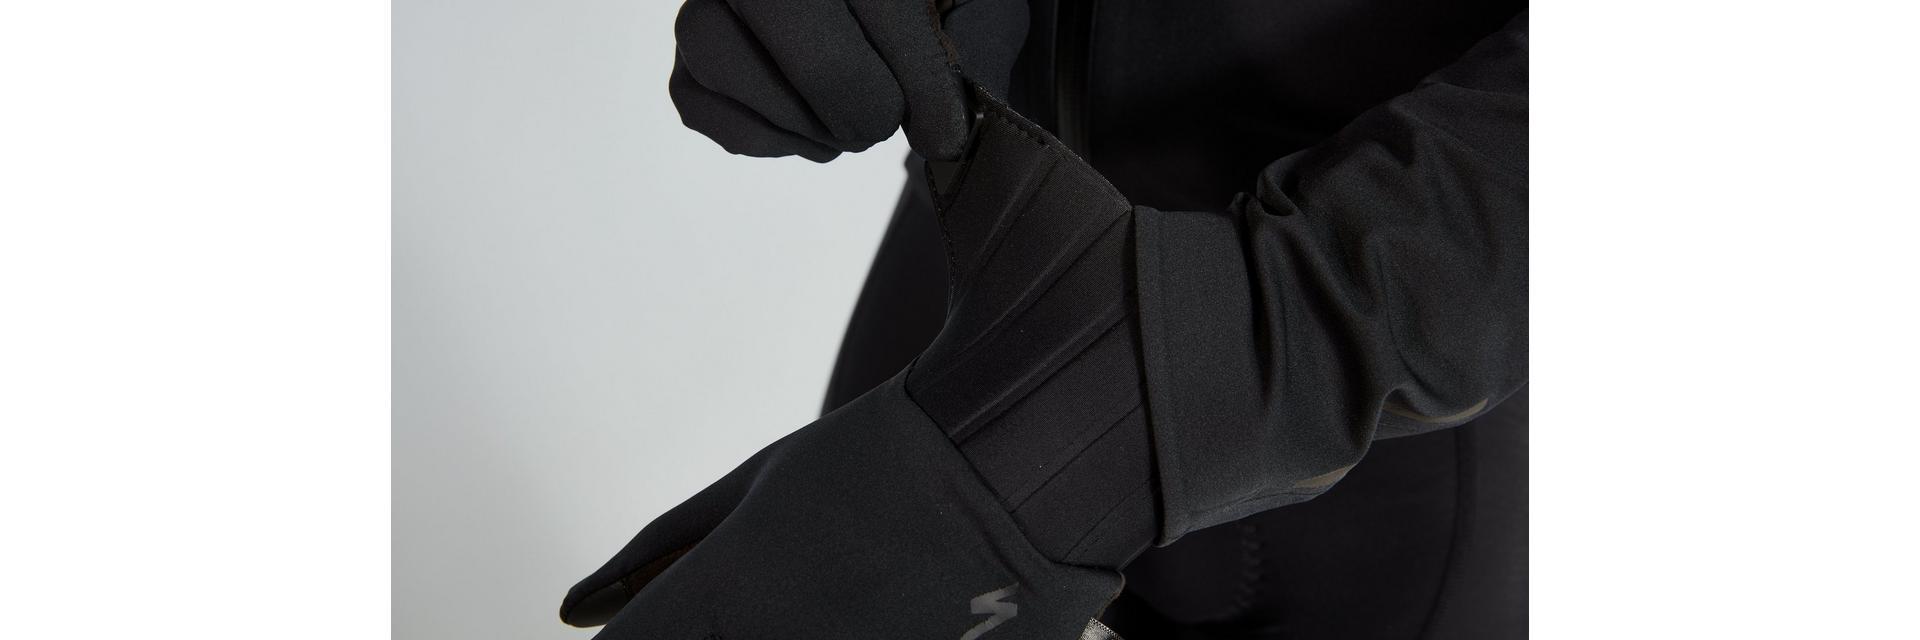 specialized guanti thermal uomo prime series - nero